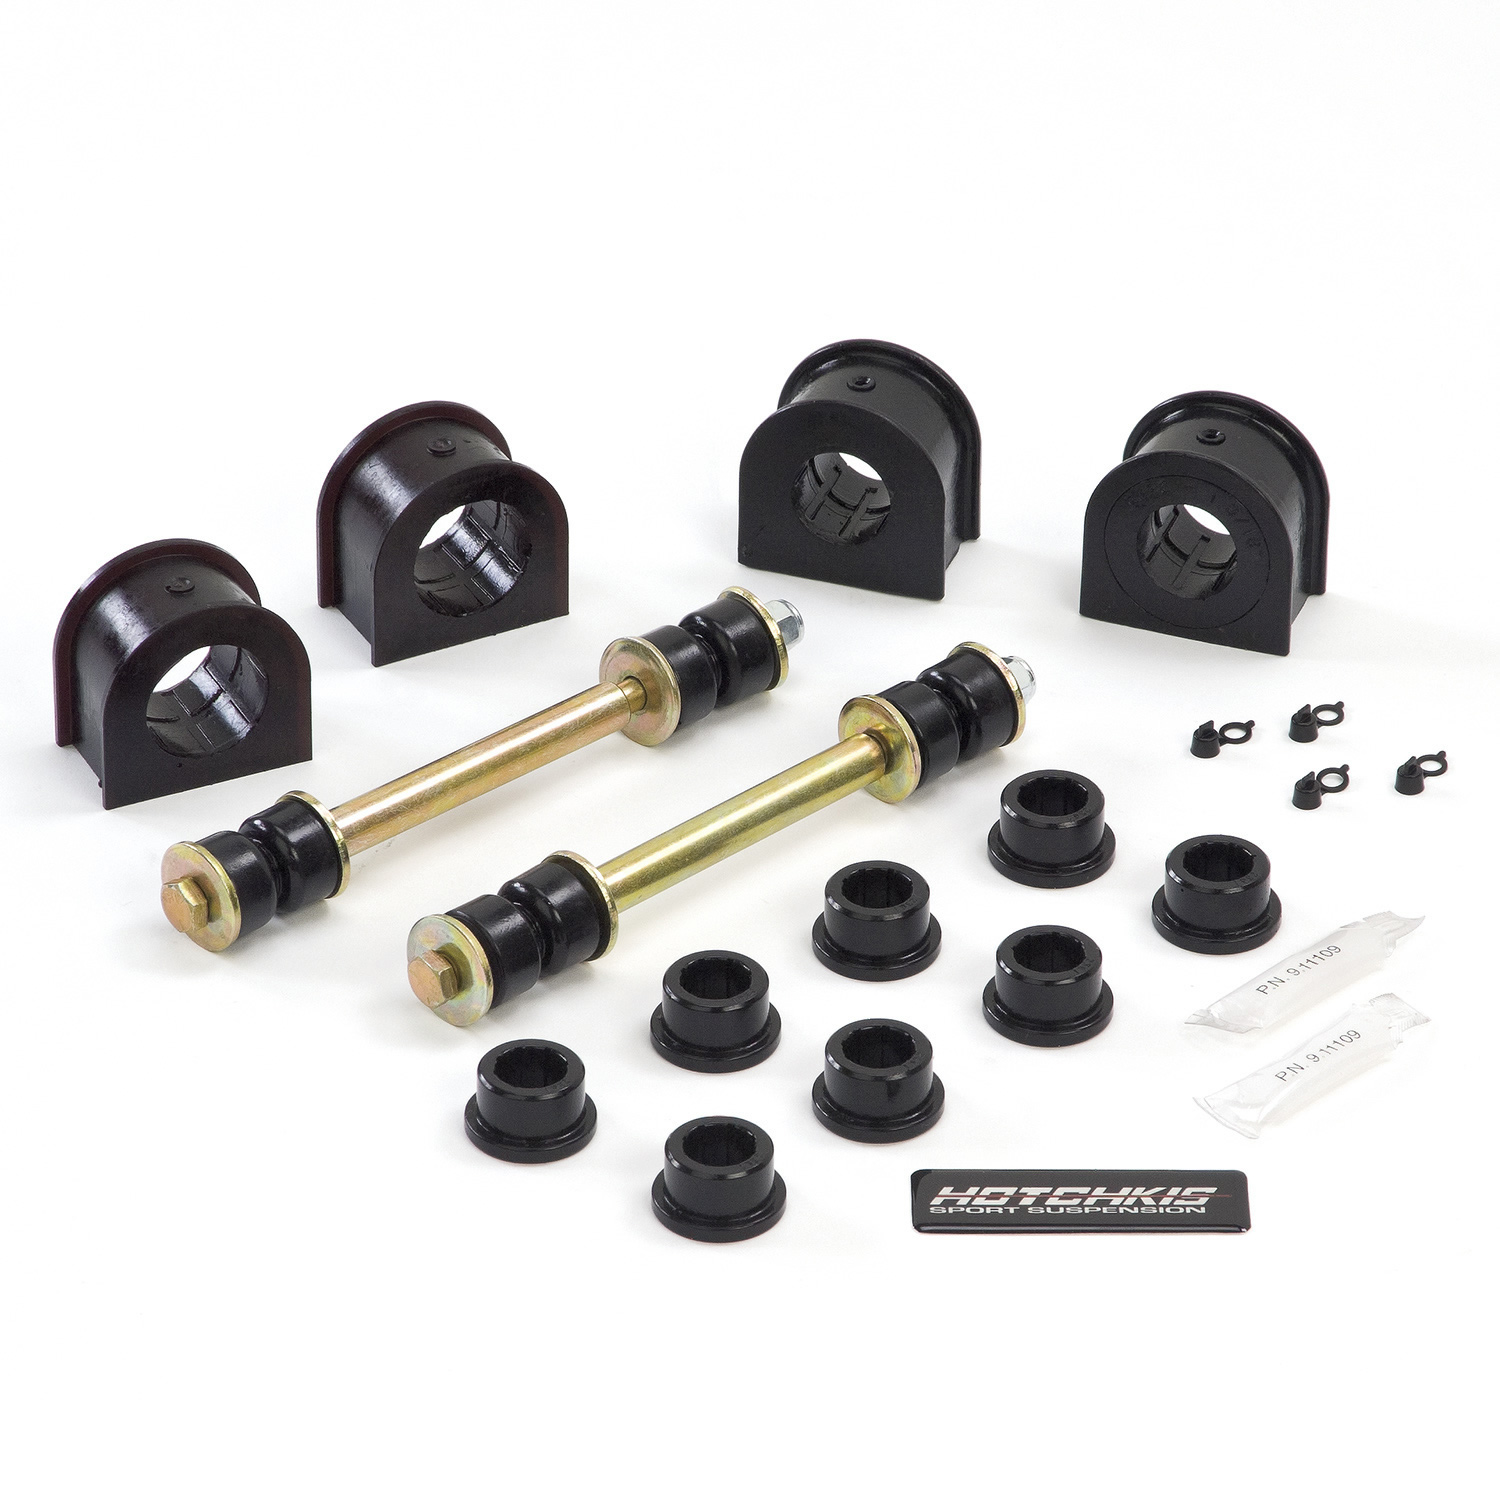 Rebuild Service Kit For Hotchkis Sport Suspension Product Kit 2201F